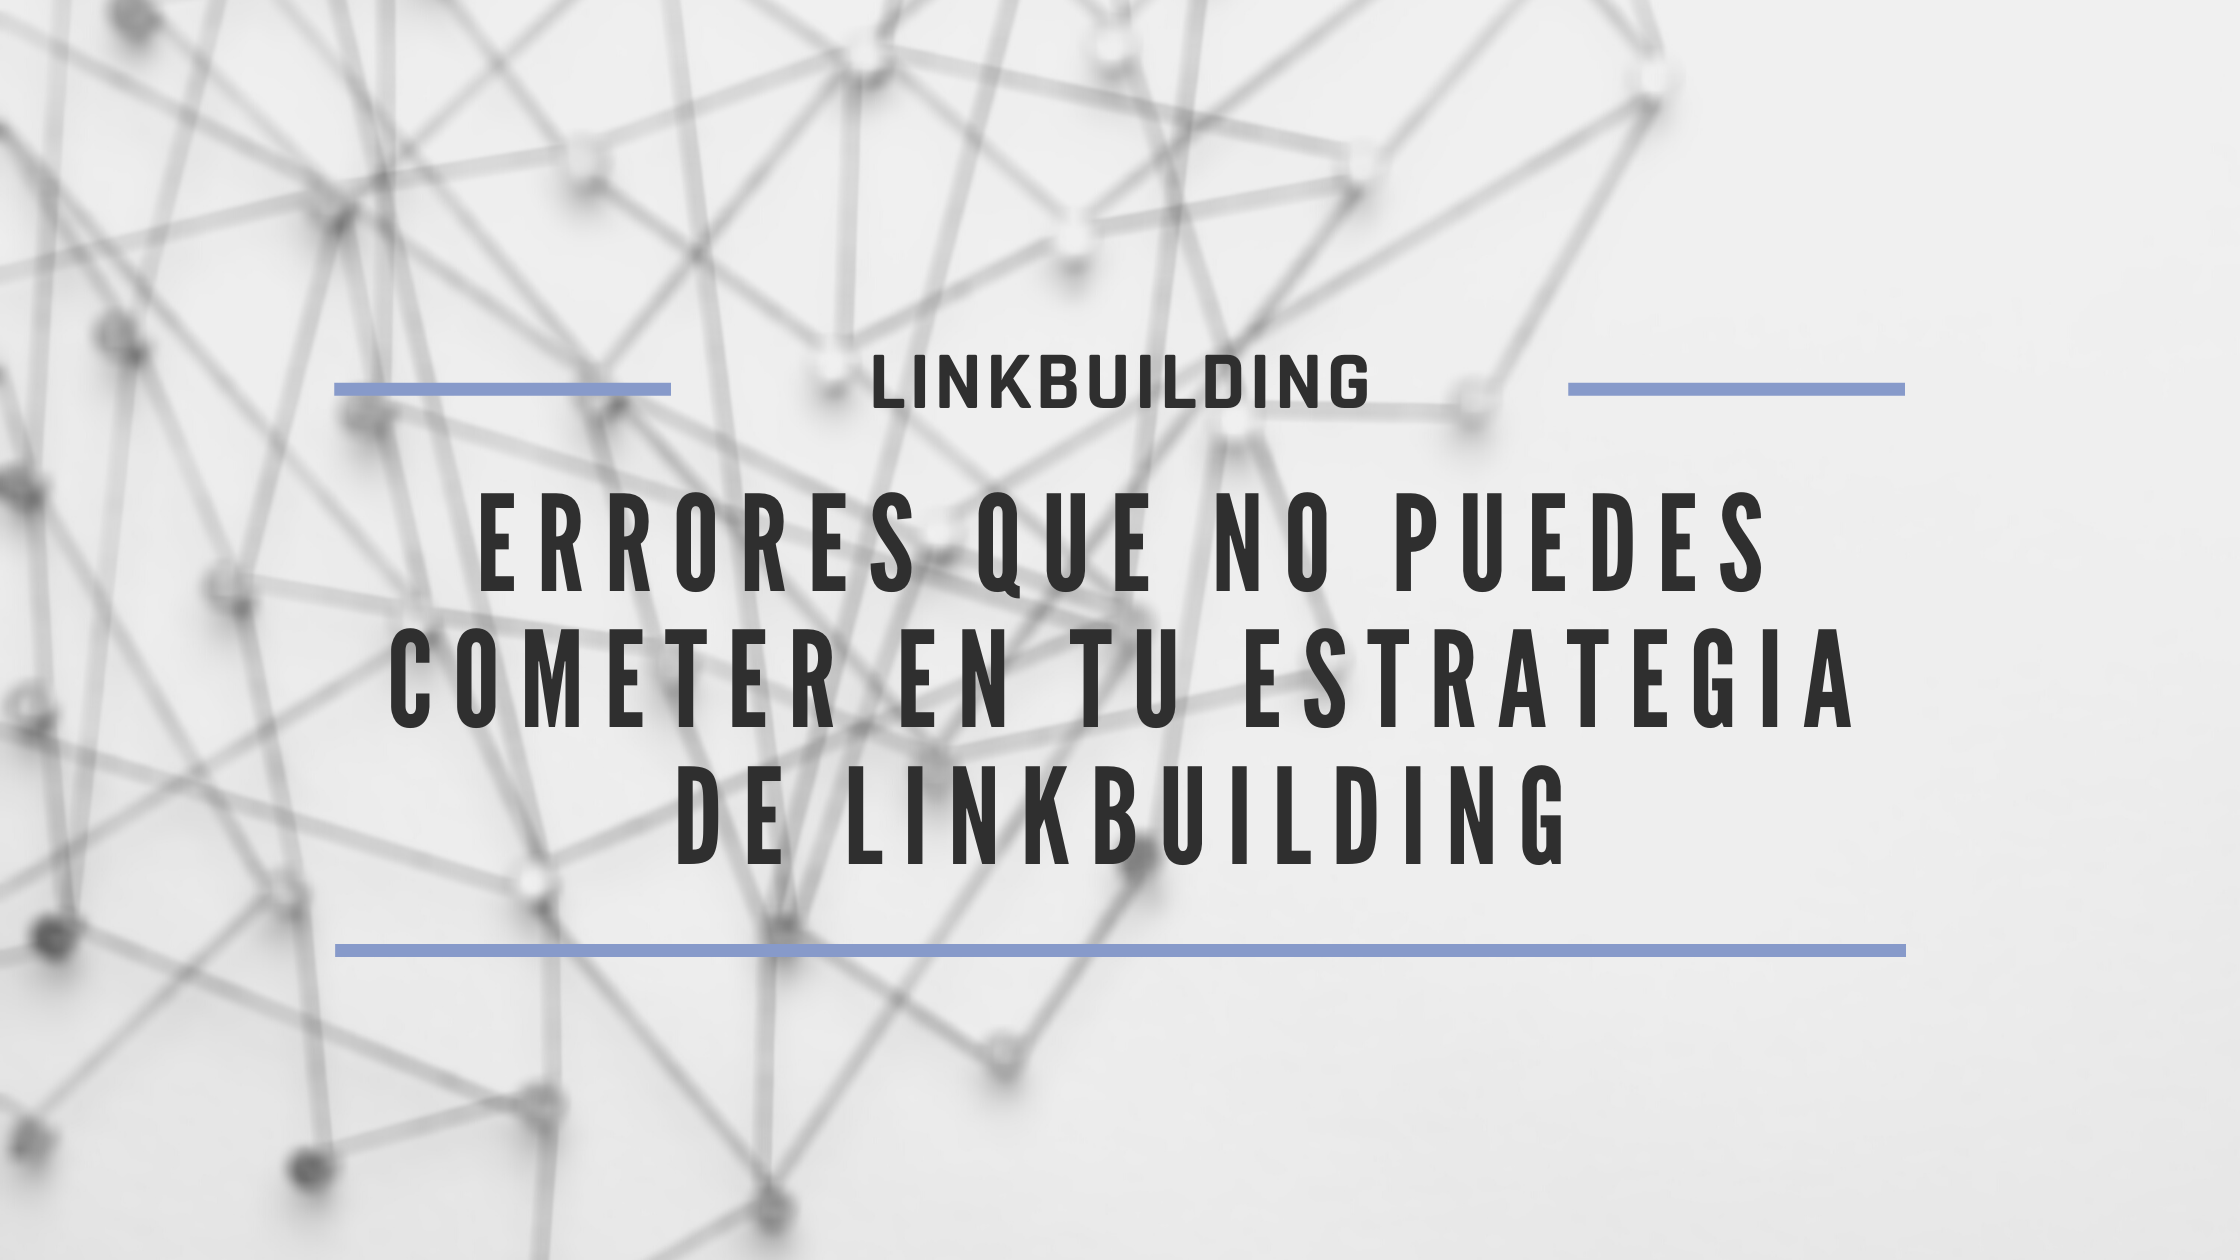 Linkbuilding